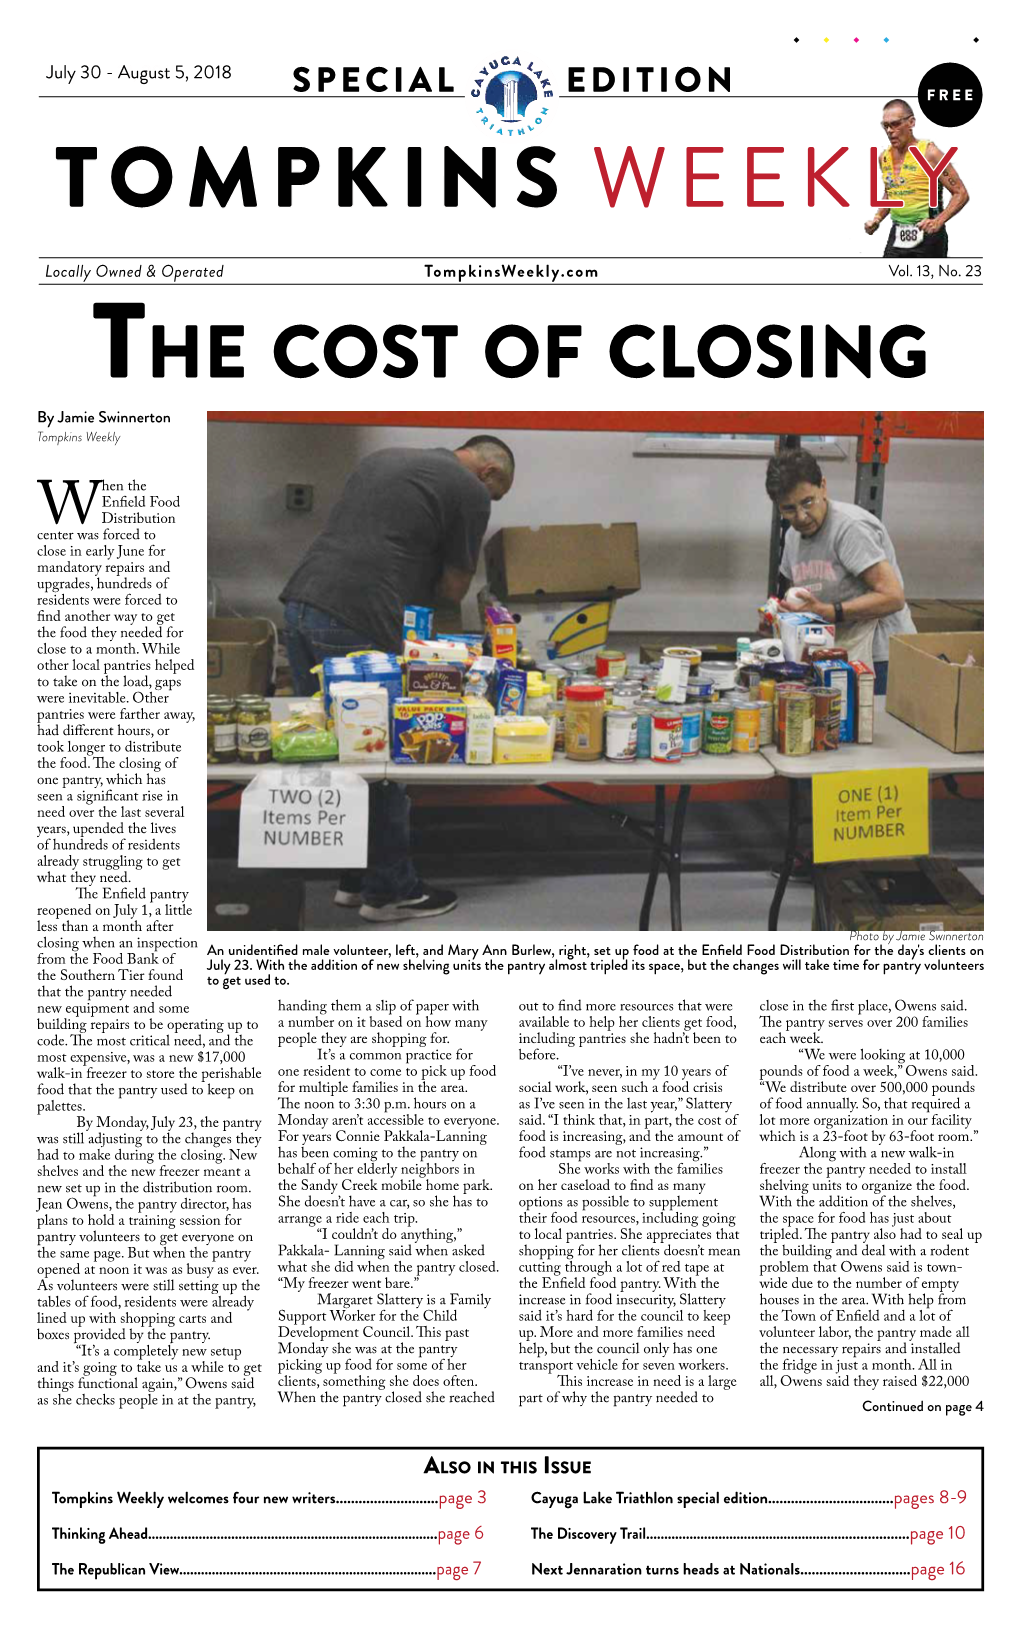 The Cost of Closing by Jamie Swinnerton Tompkins Weekly